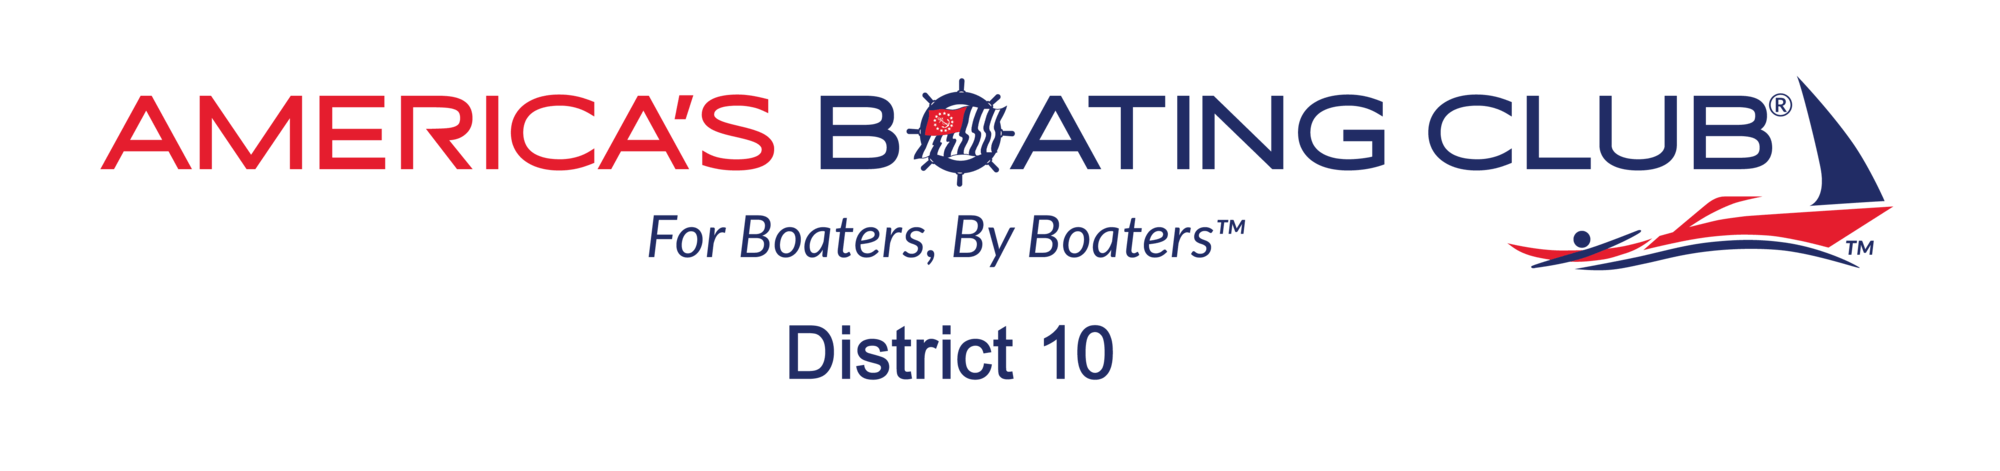 America's Boating Club District 10 Logo